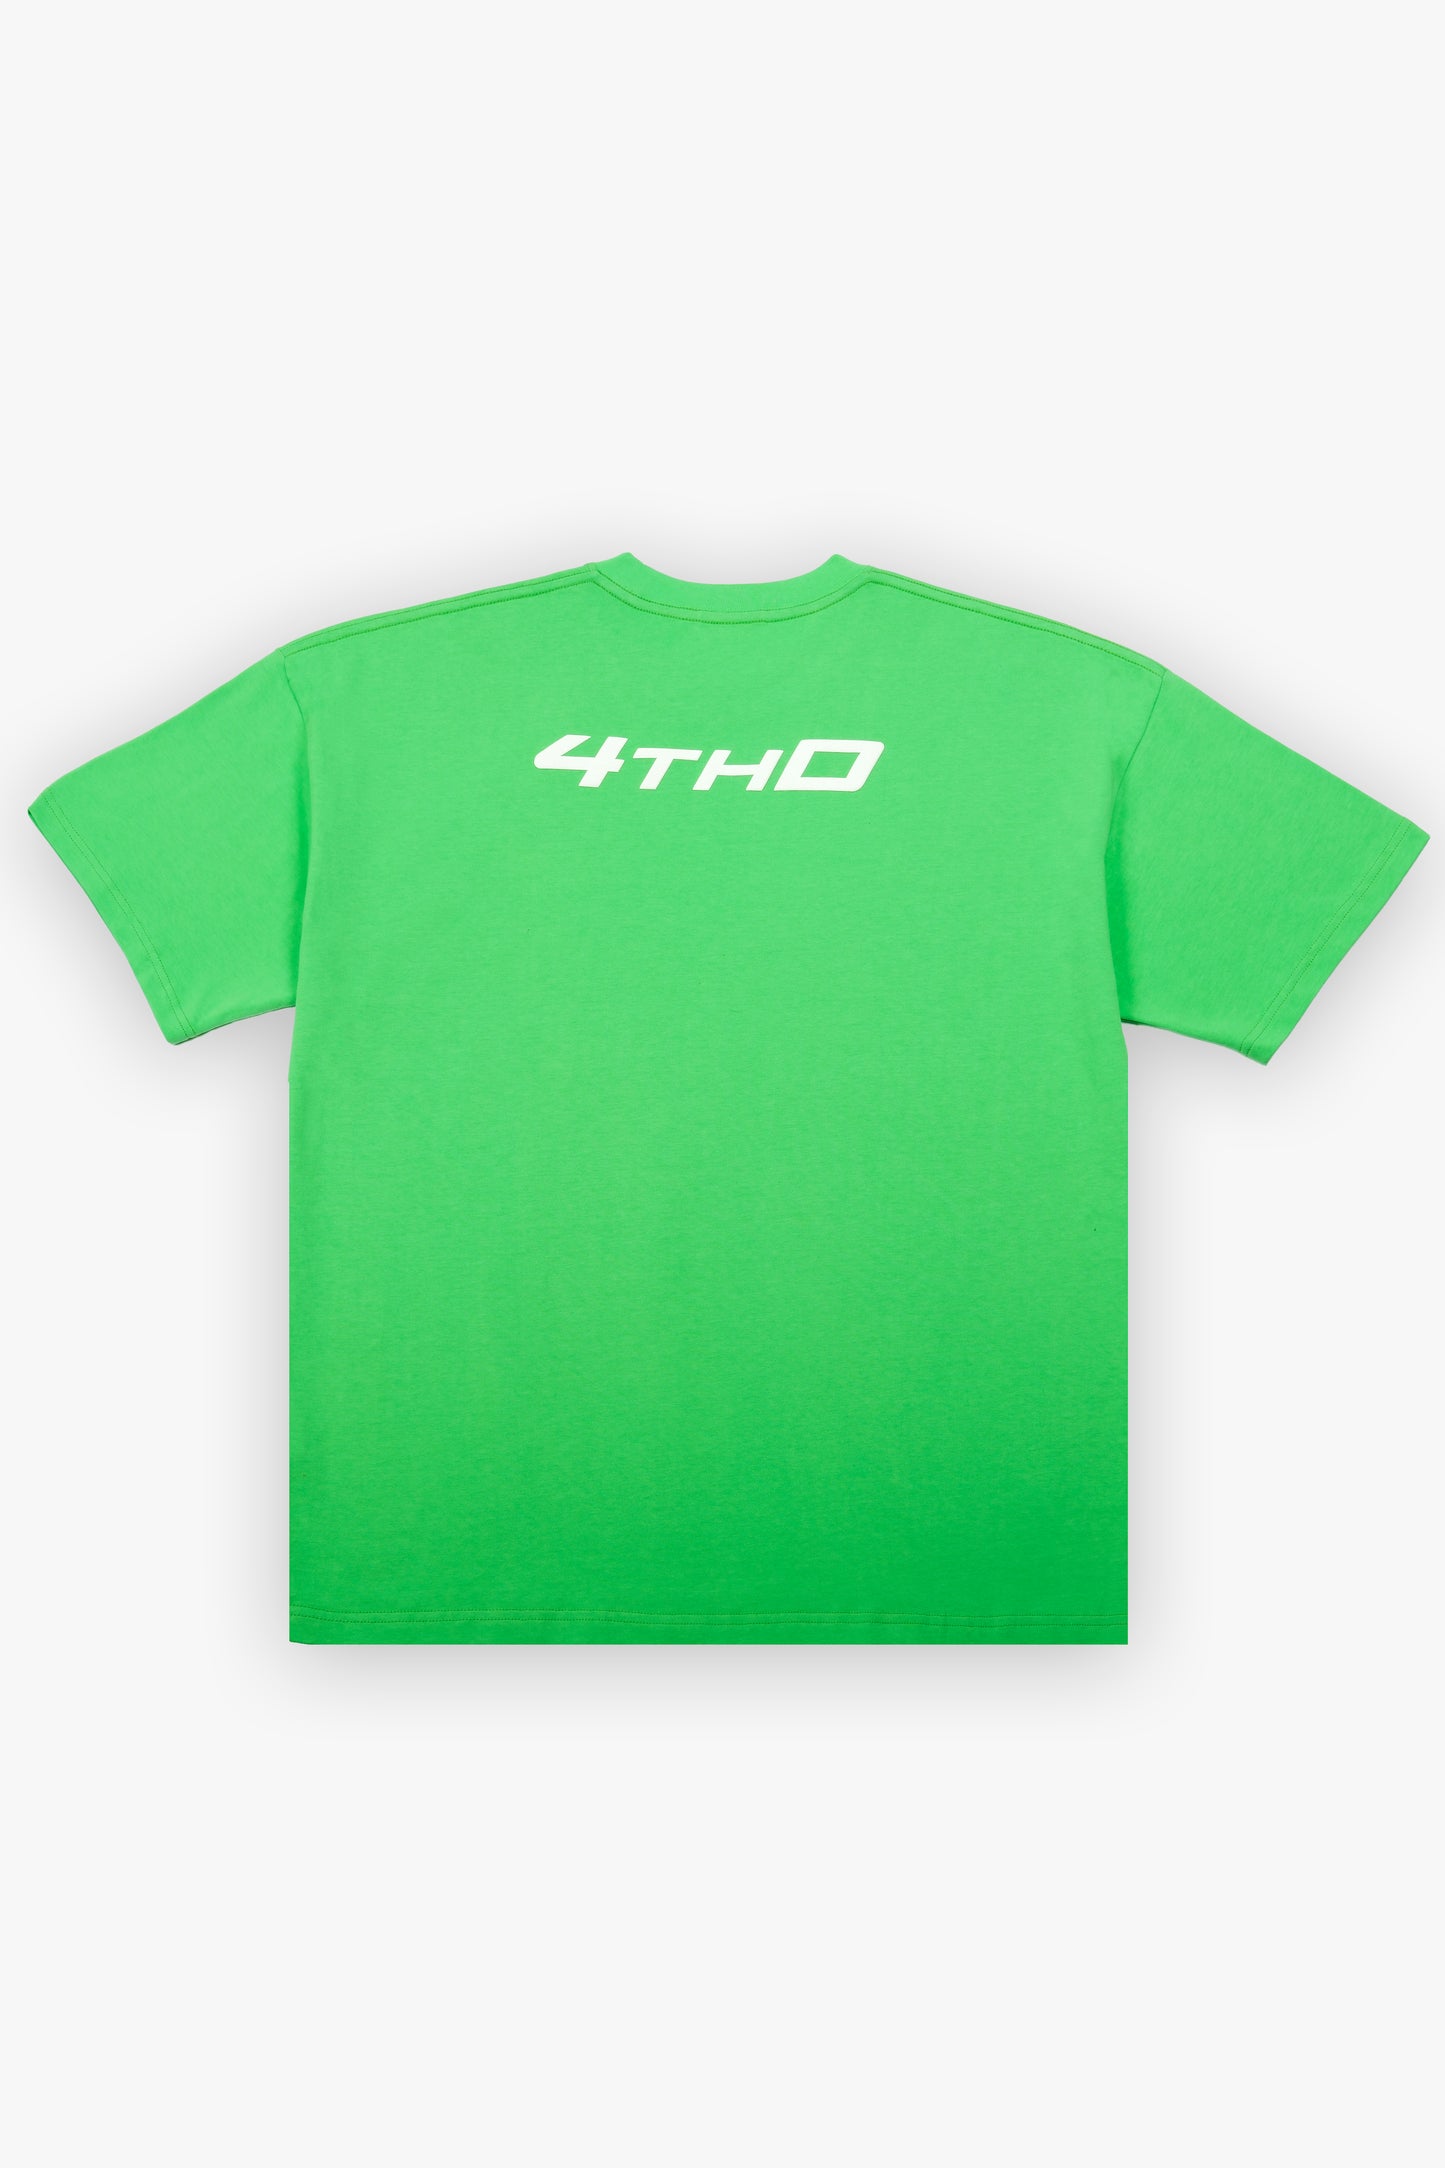 Colors Shirt - Green